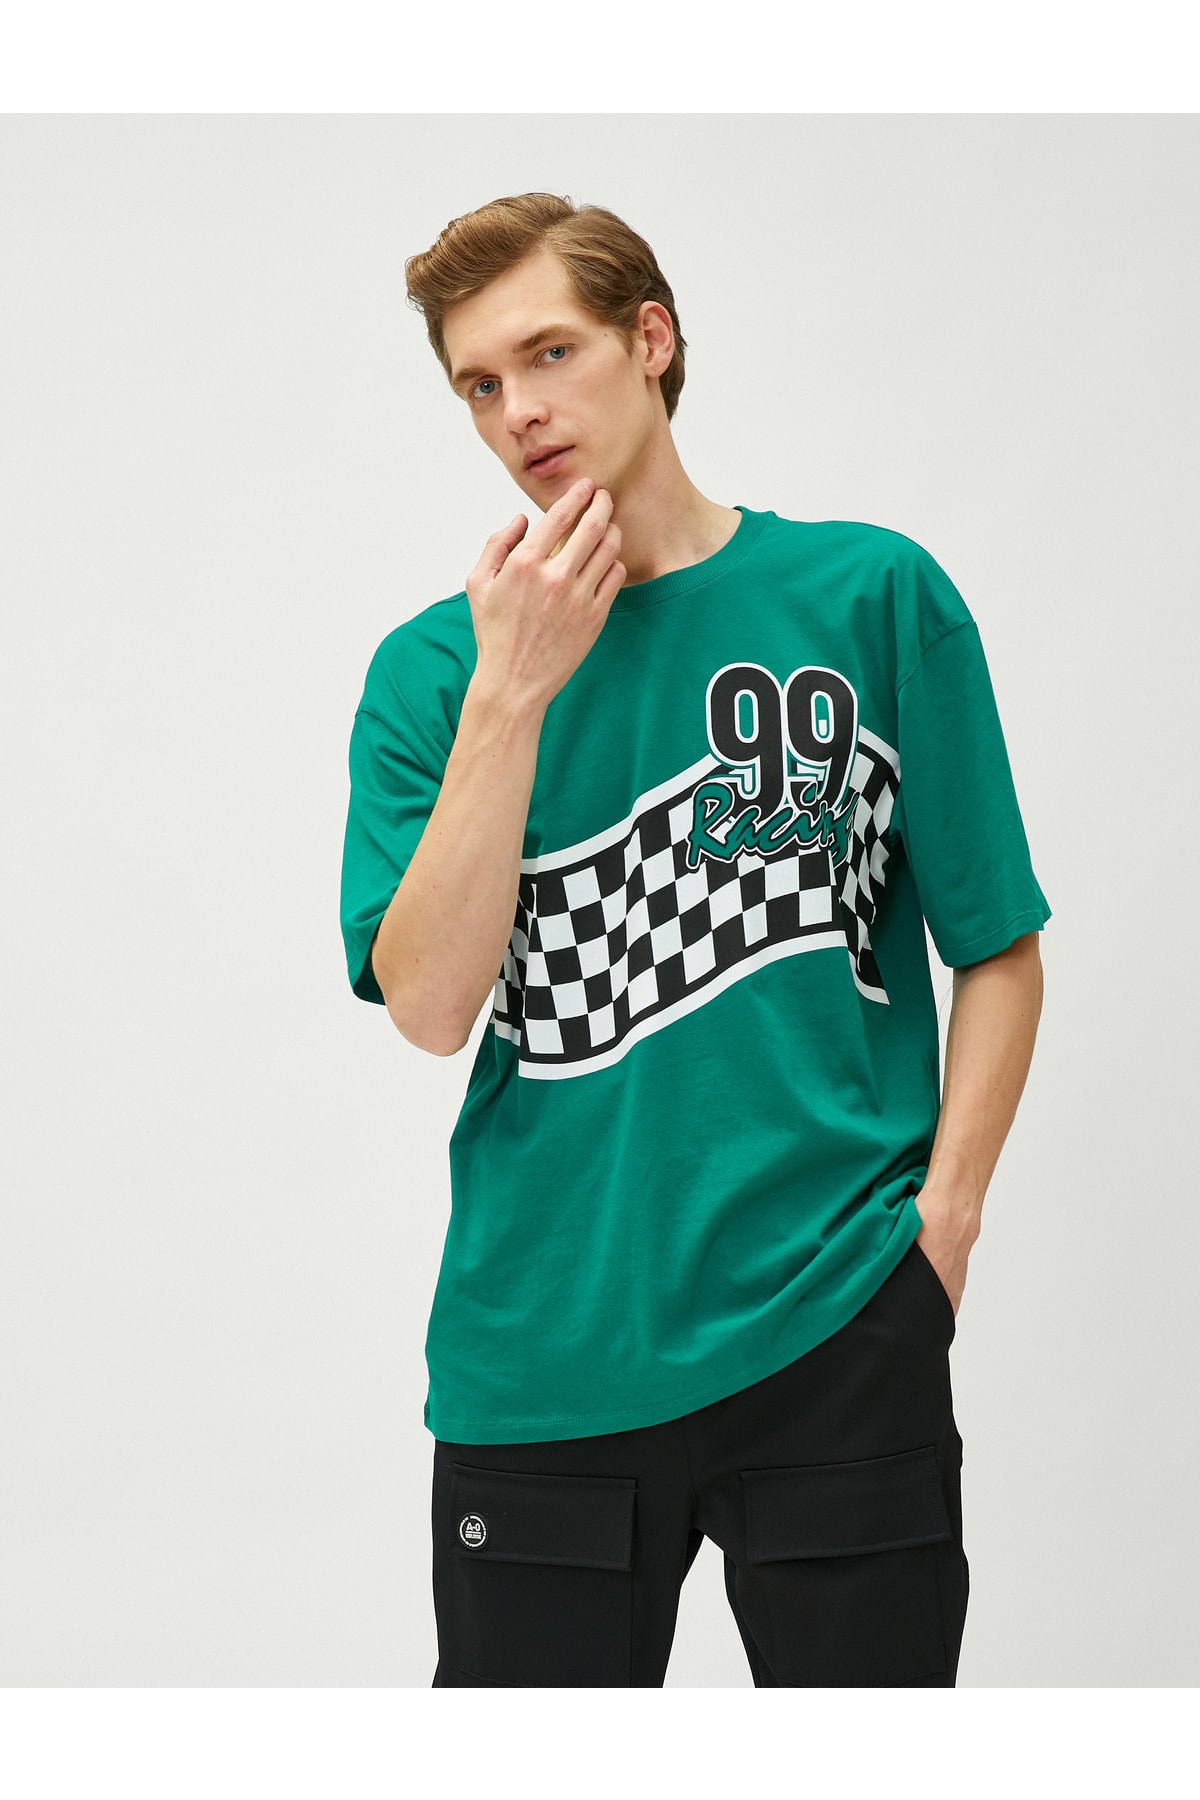 Koton Oversize T-Shirt with Printed Racing Theme, Crew Neck Cotton